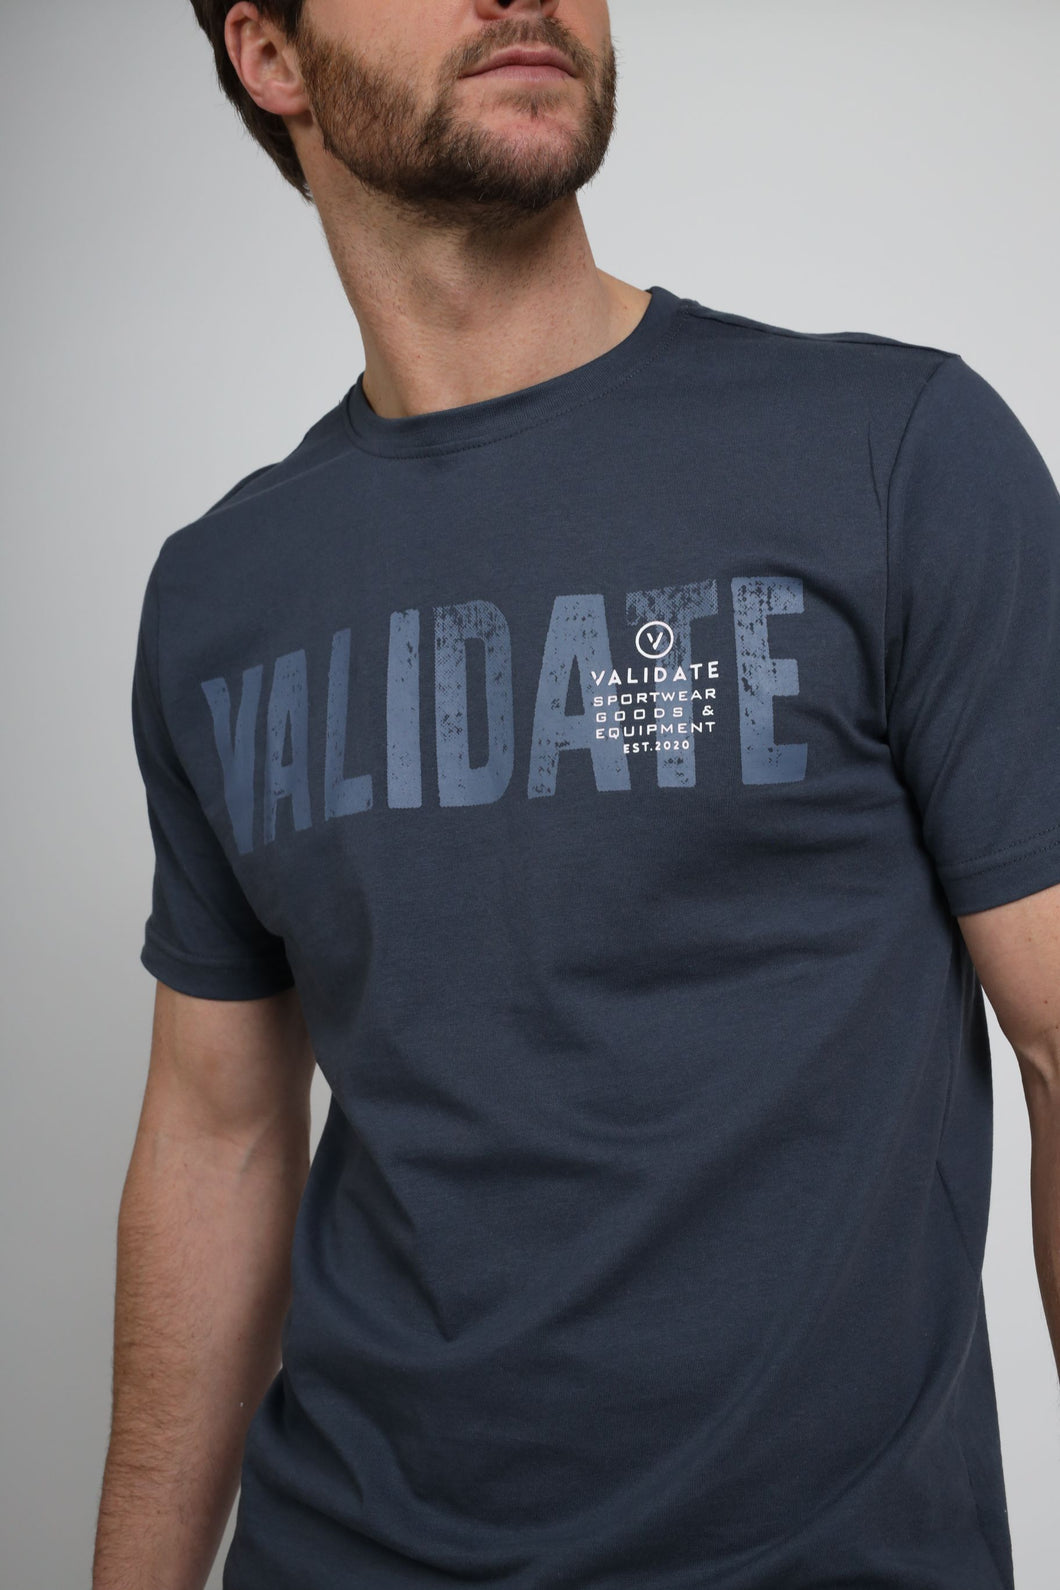 Validate Typhoon Blue Deano T-Shirt